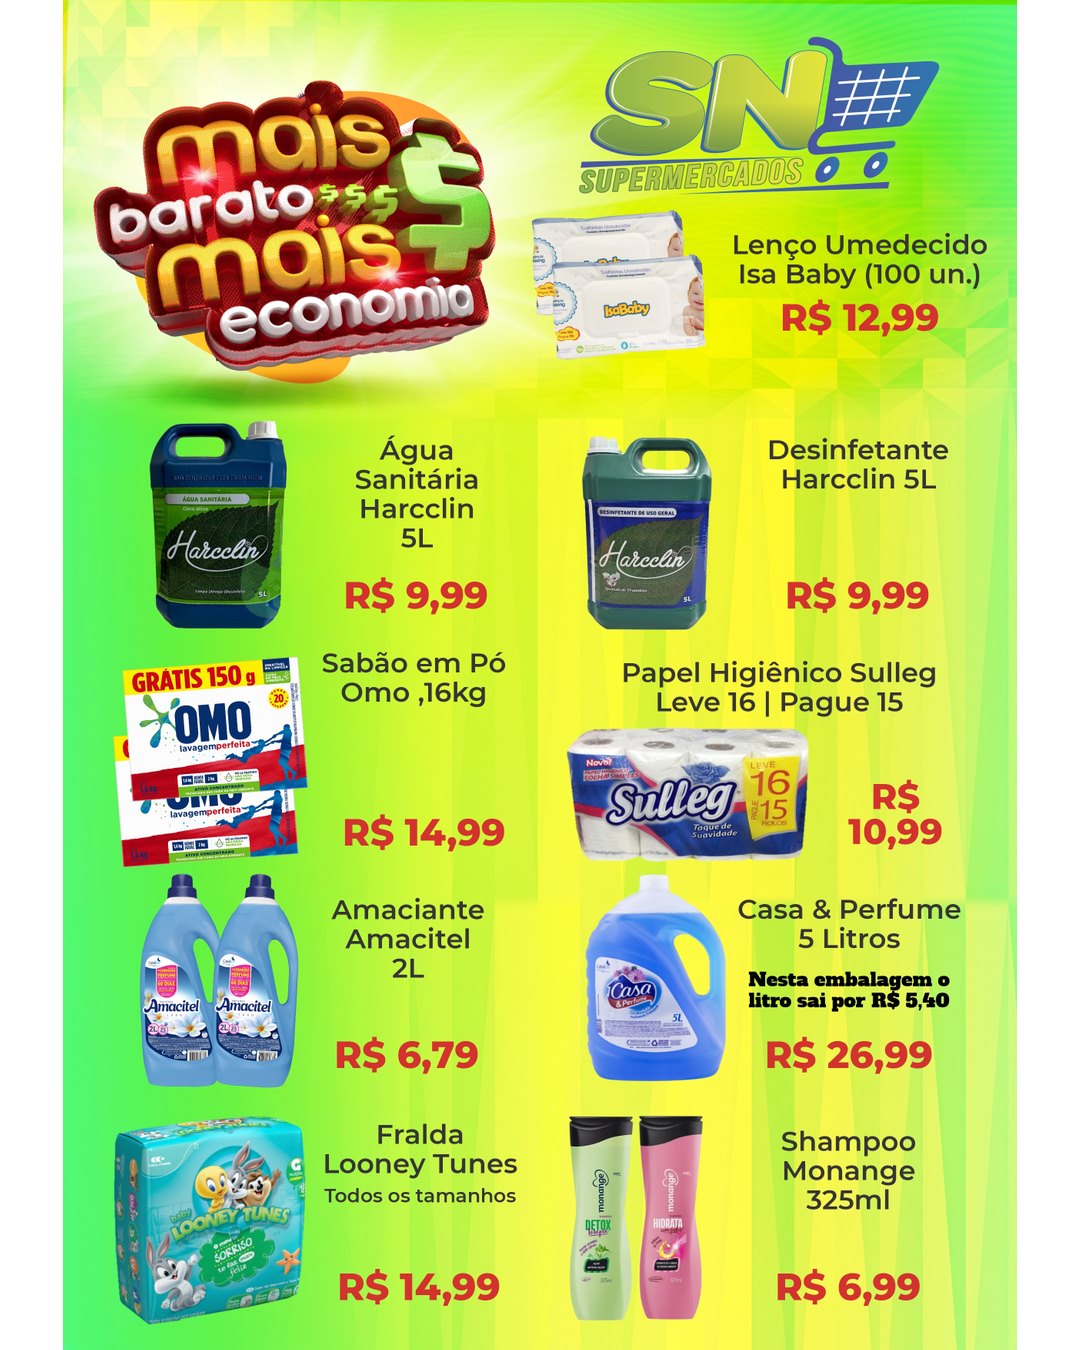 SN Supermercados tem ofertas para higiene e limpeza, nesta segunda-feira